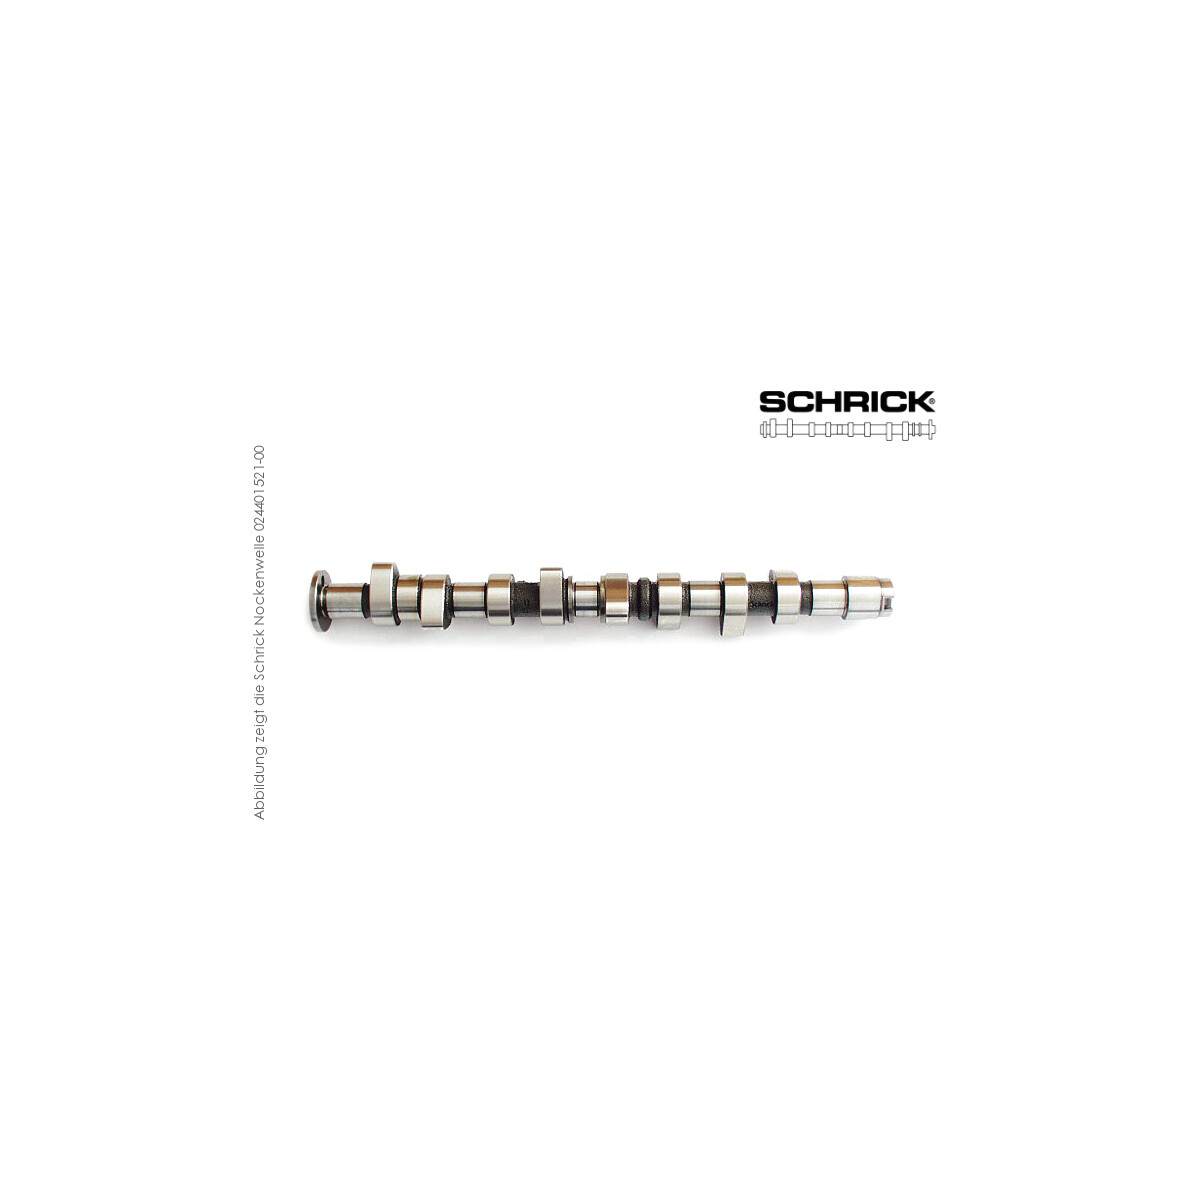 Schrick Nockenwelle für Seat Toledo, Cordoba, Ibiza | 1,5-2,0L 8V 4-Zyl. 827  | 288° Synchron (Schrick 001401880-02)